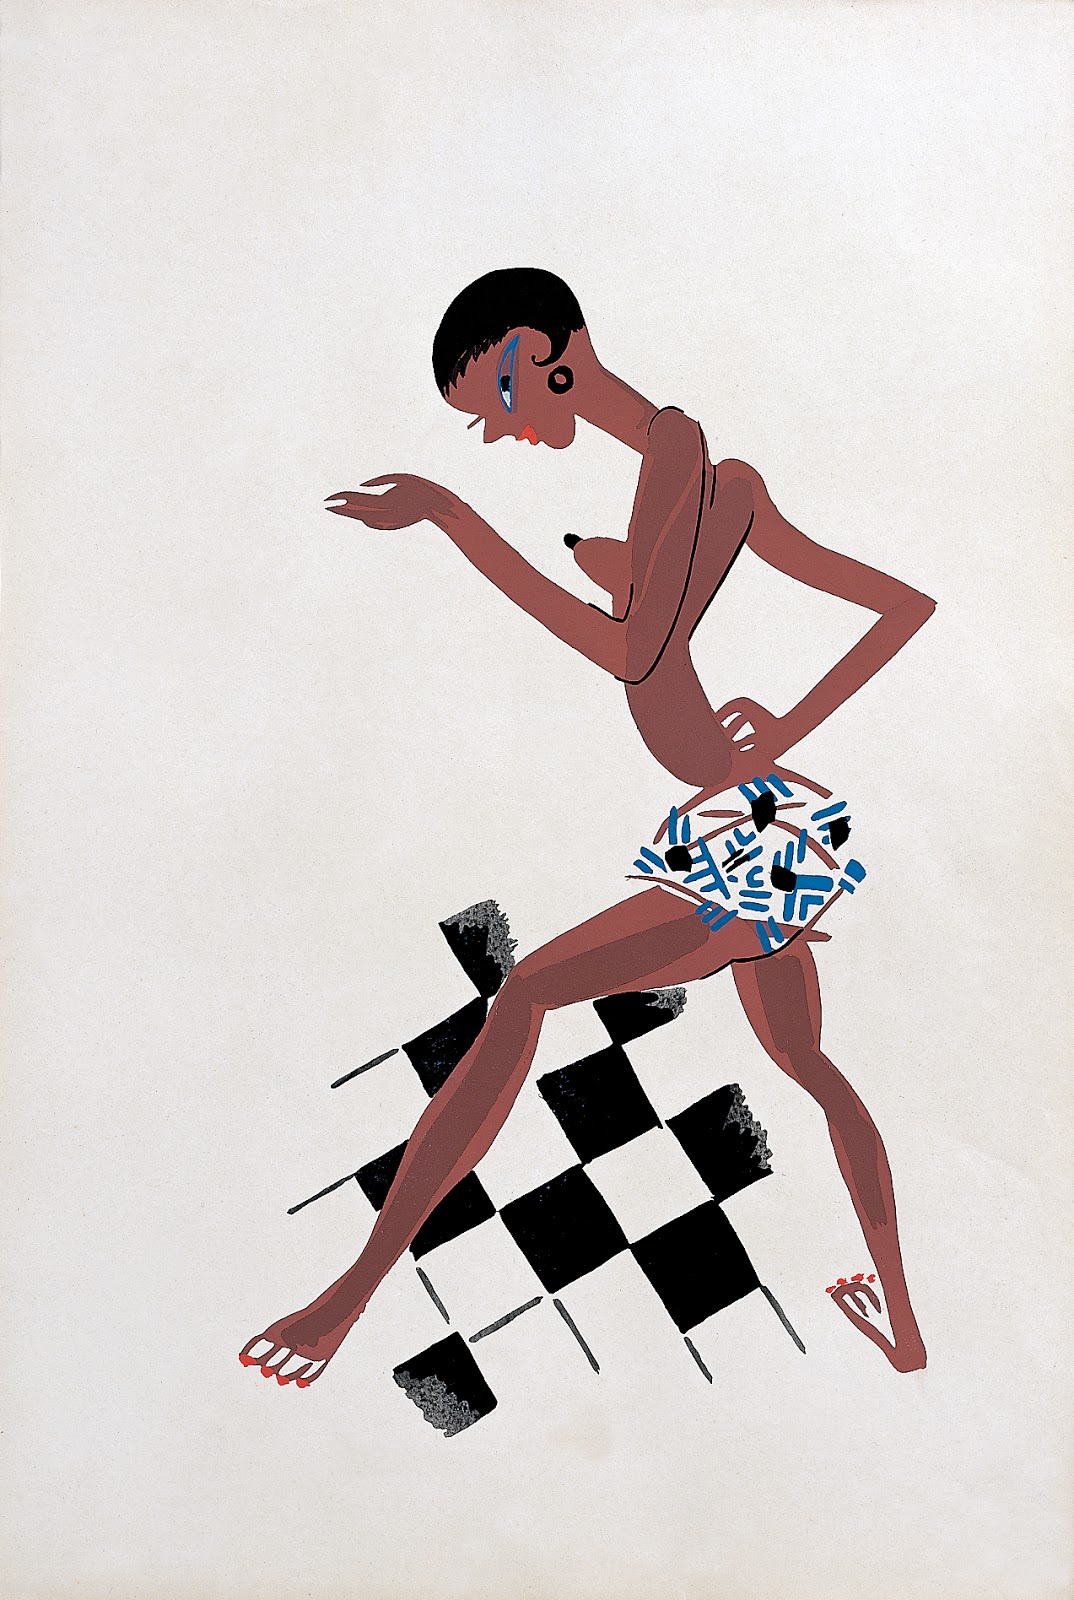 ©Paul Colin - Le Tumulte Noir, 1927. Ilustración | Illustration